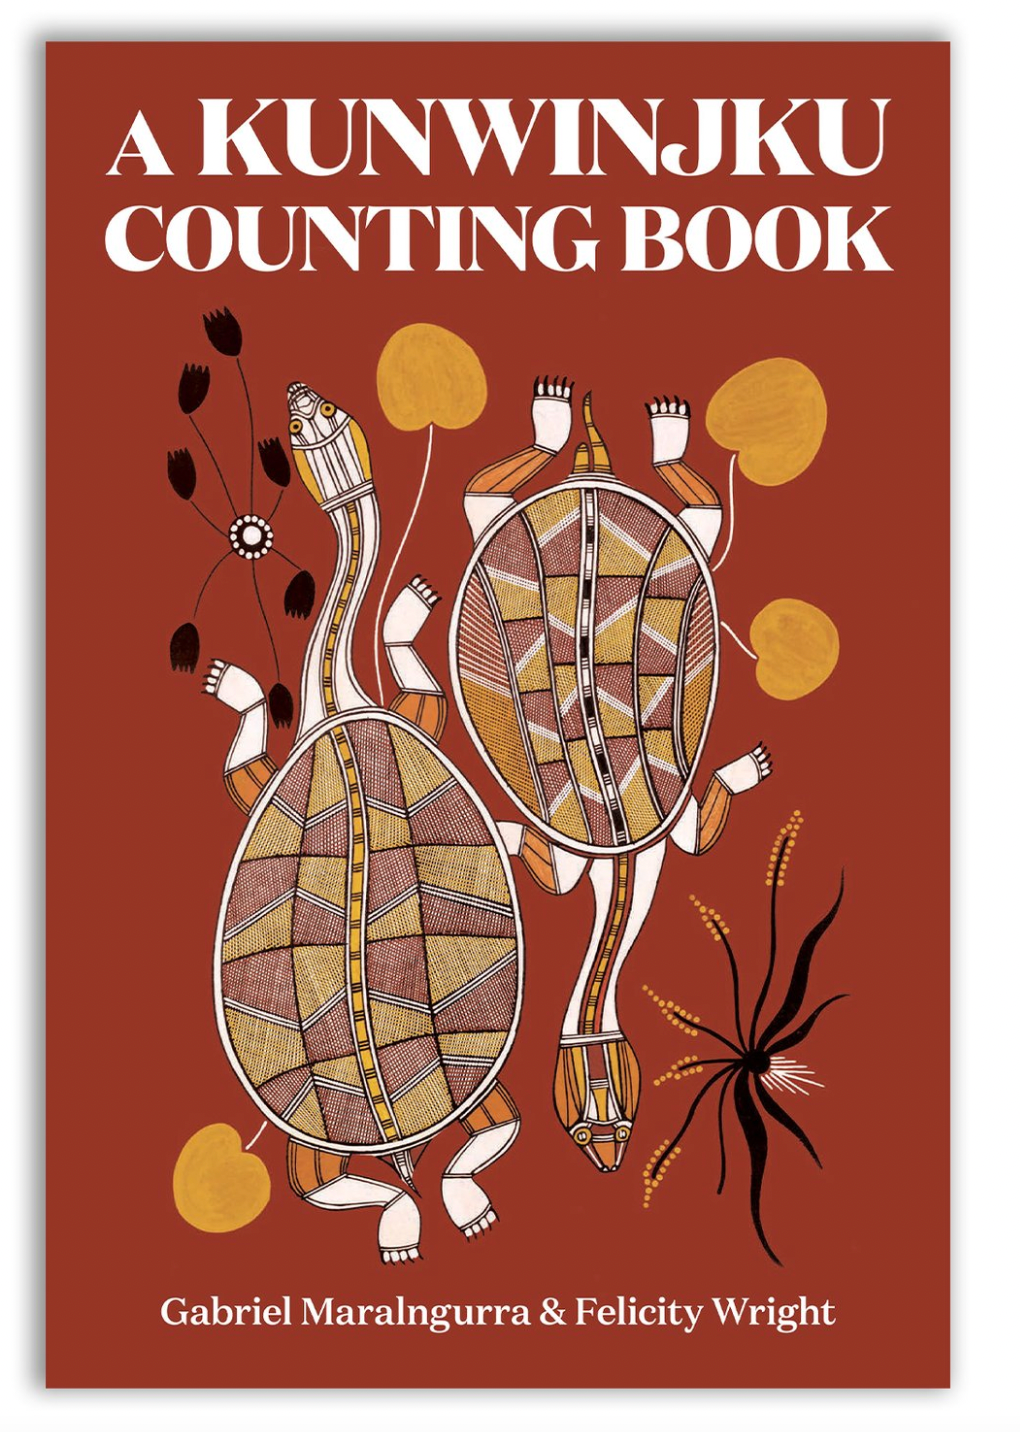 Kunwinjku Counting Book